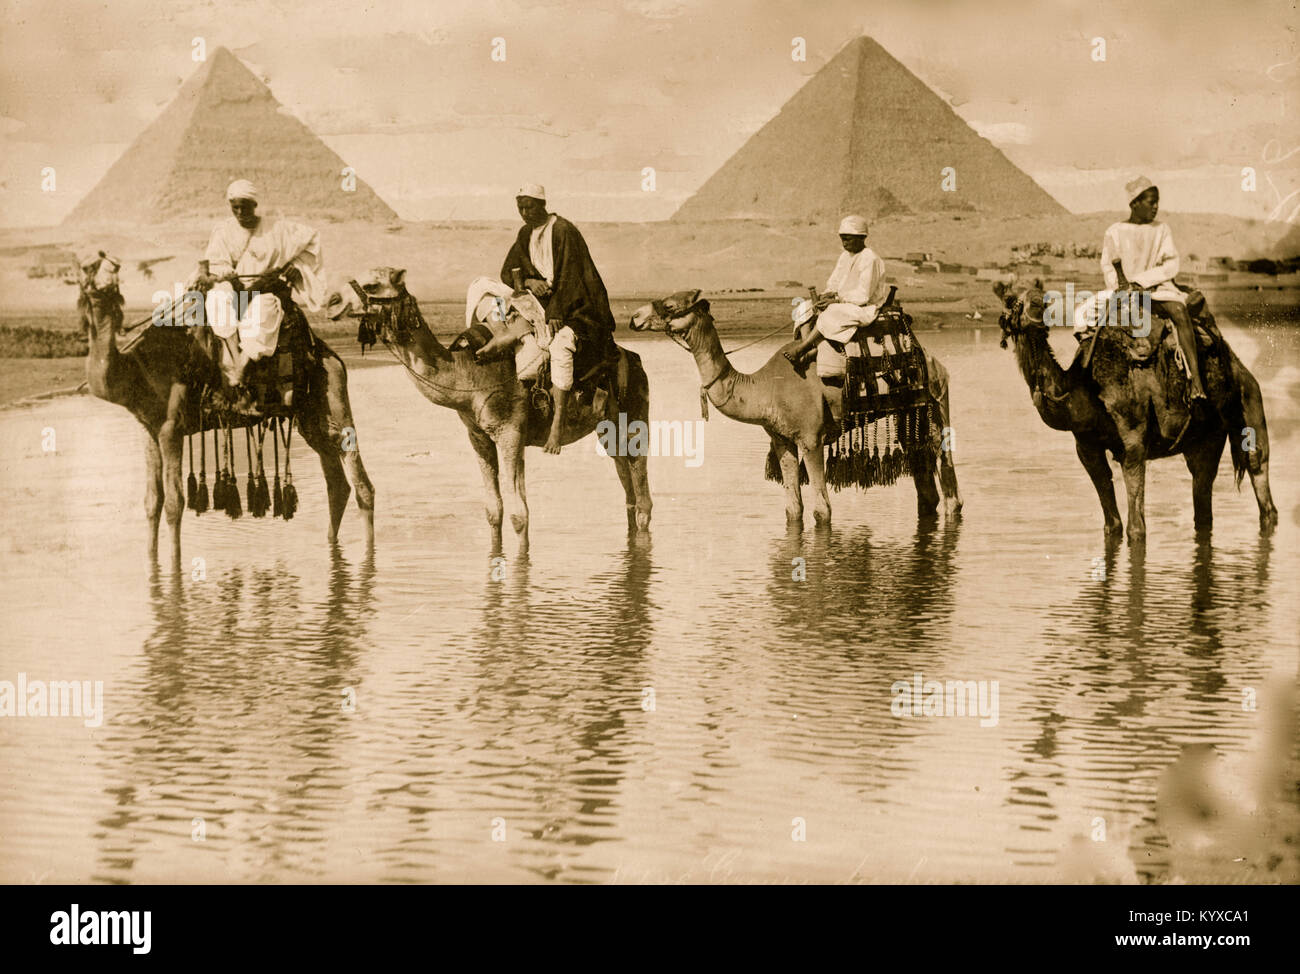 Camel men & pyramids, Egypt Stock Photo